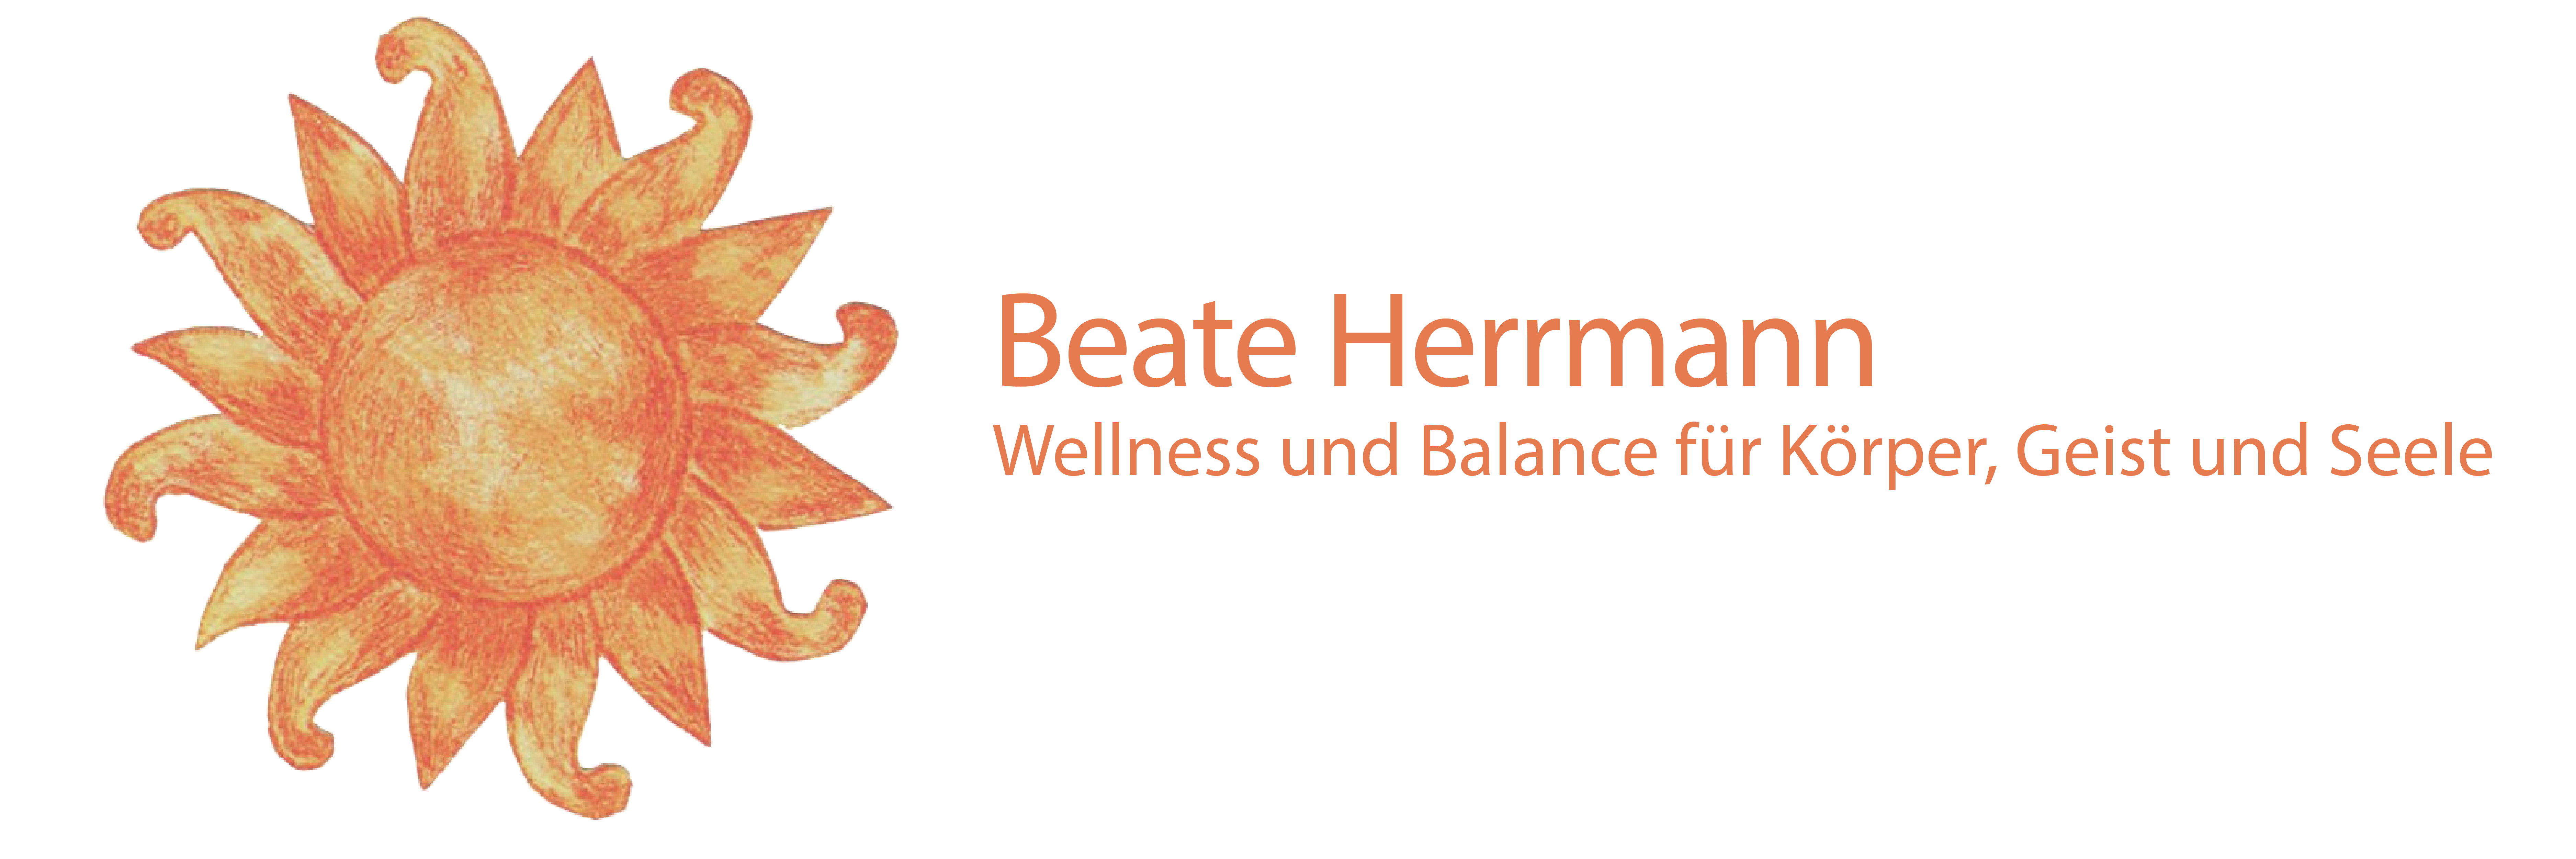 Wellness & Balance, Beate Herrmann